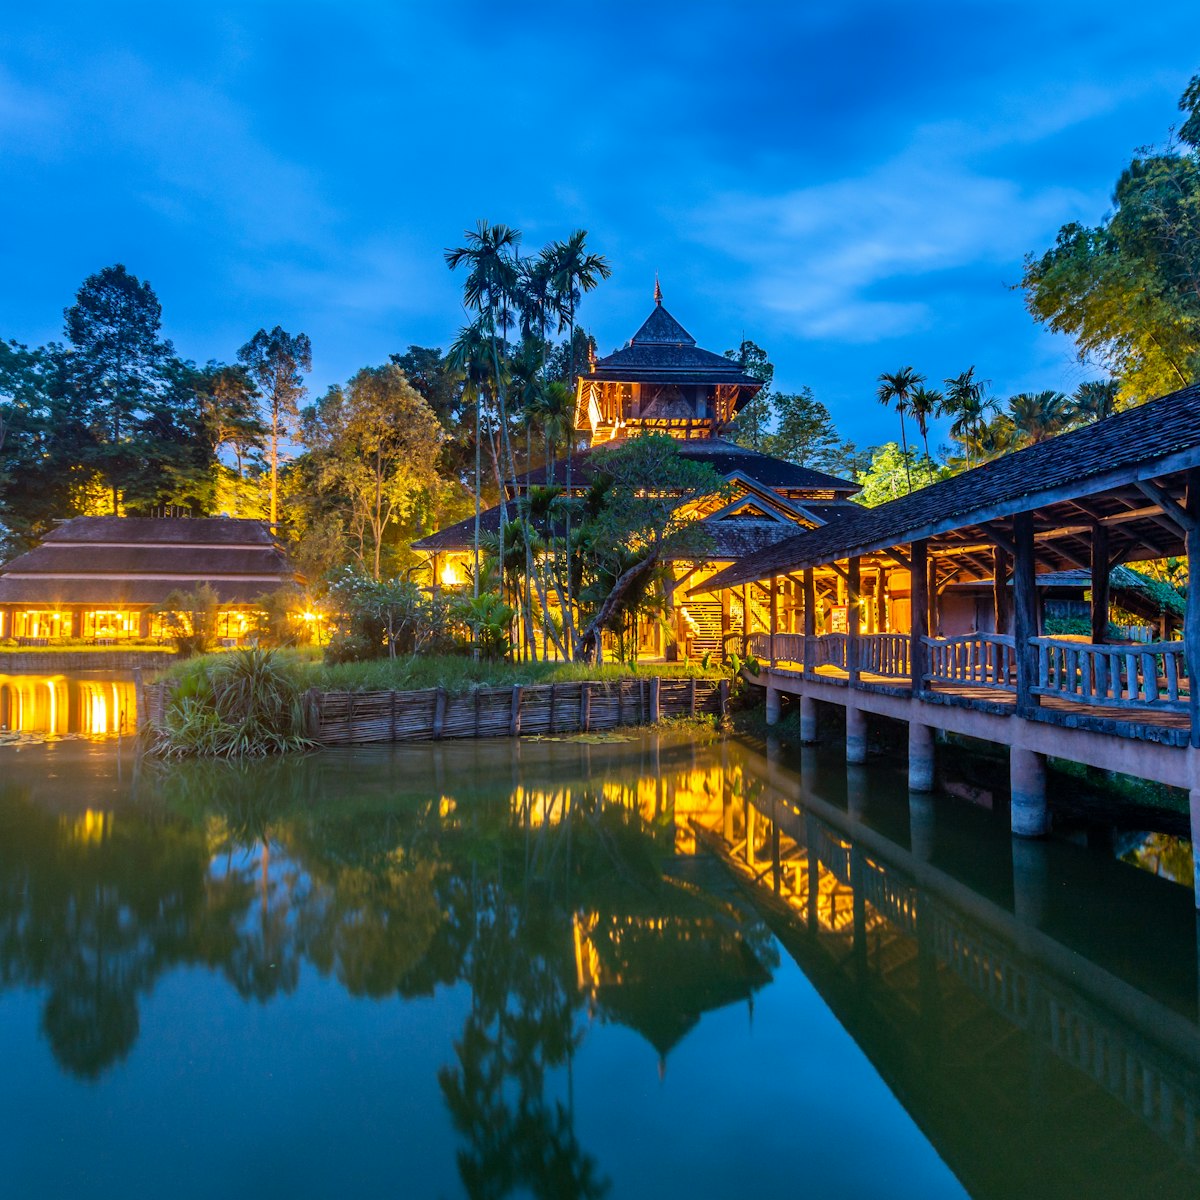 Mae Fah Luang Art and Culture Park in Chiang Rai, Thailand.